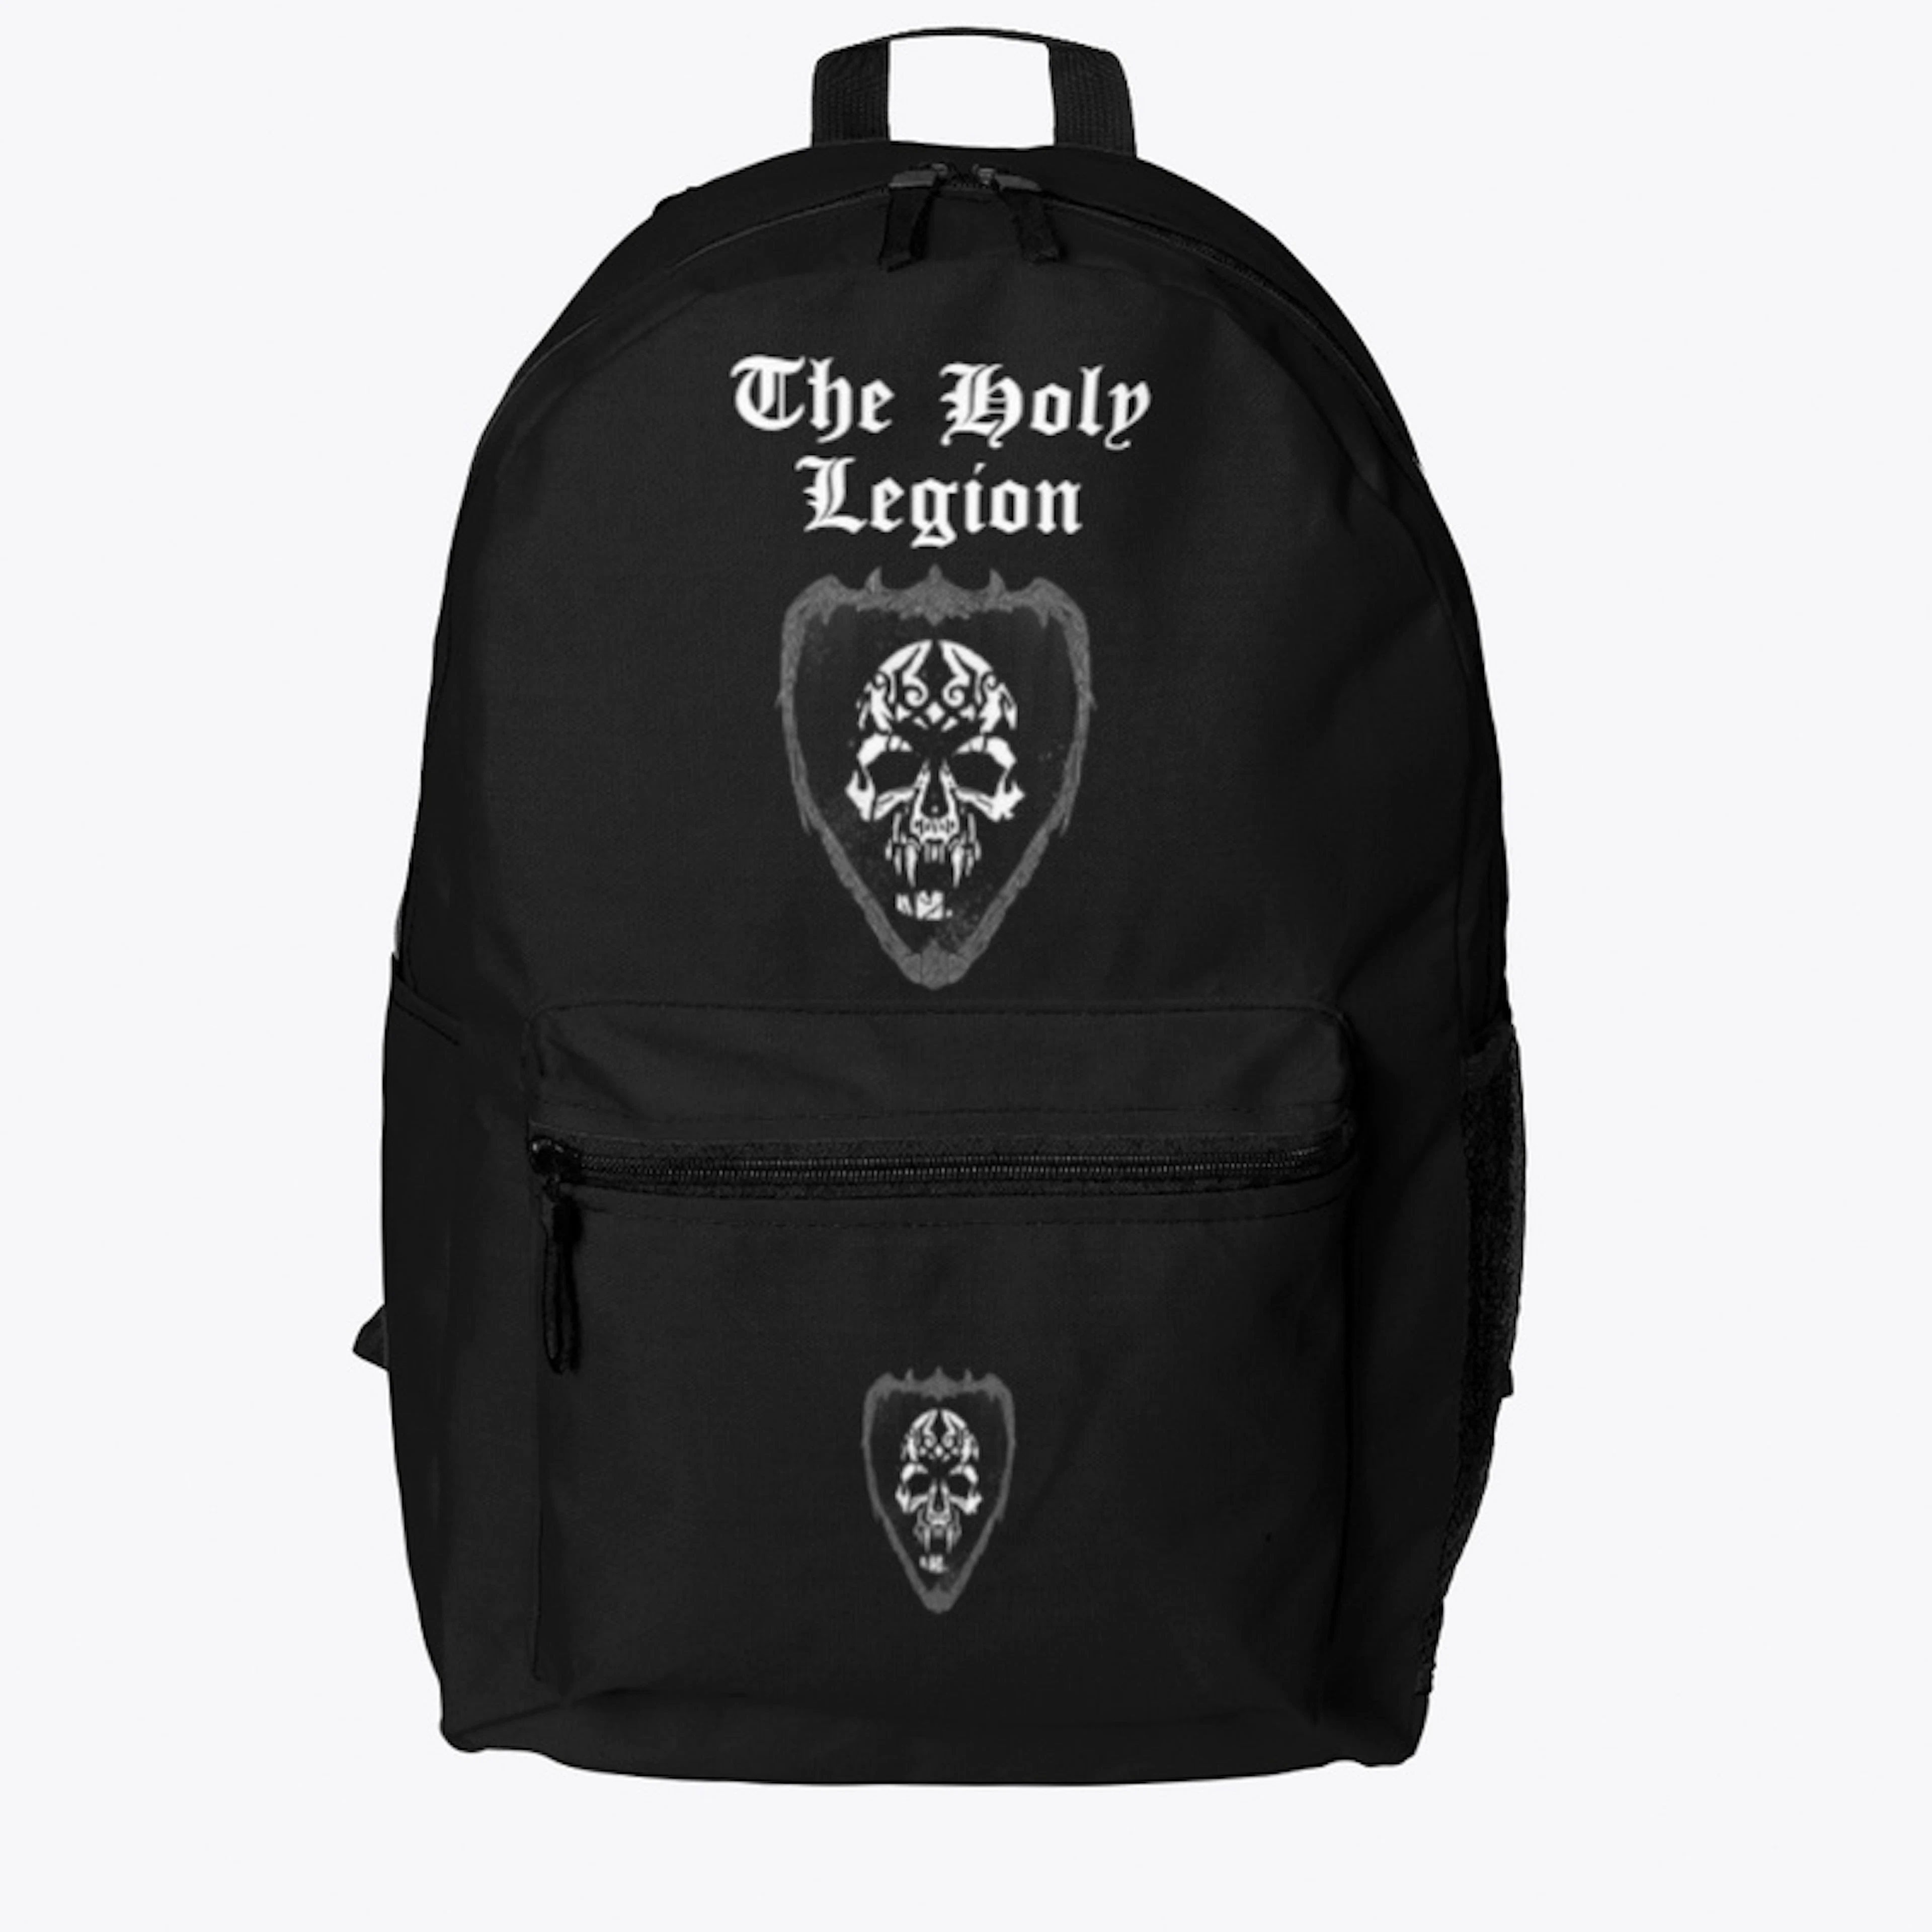 Holy Legion Backpack